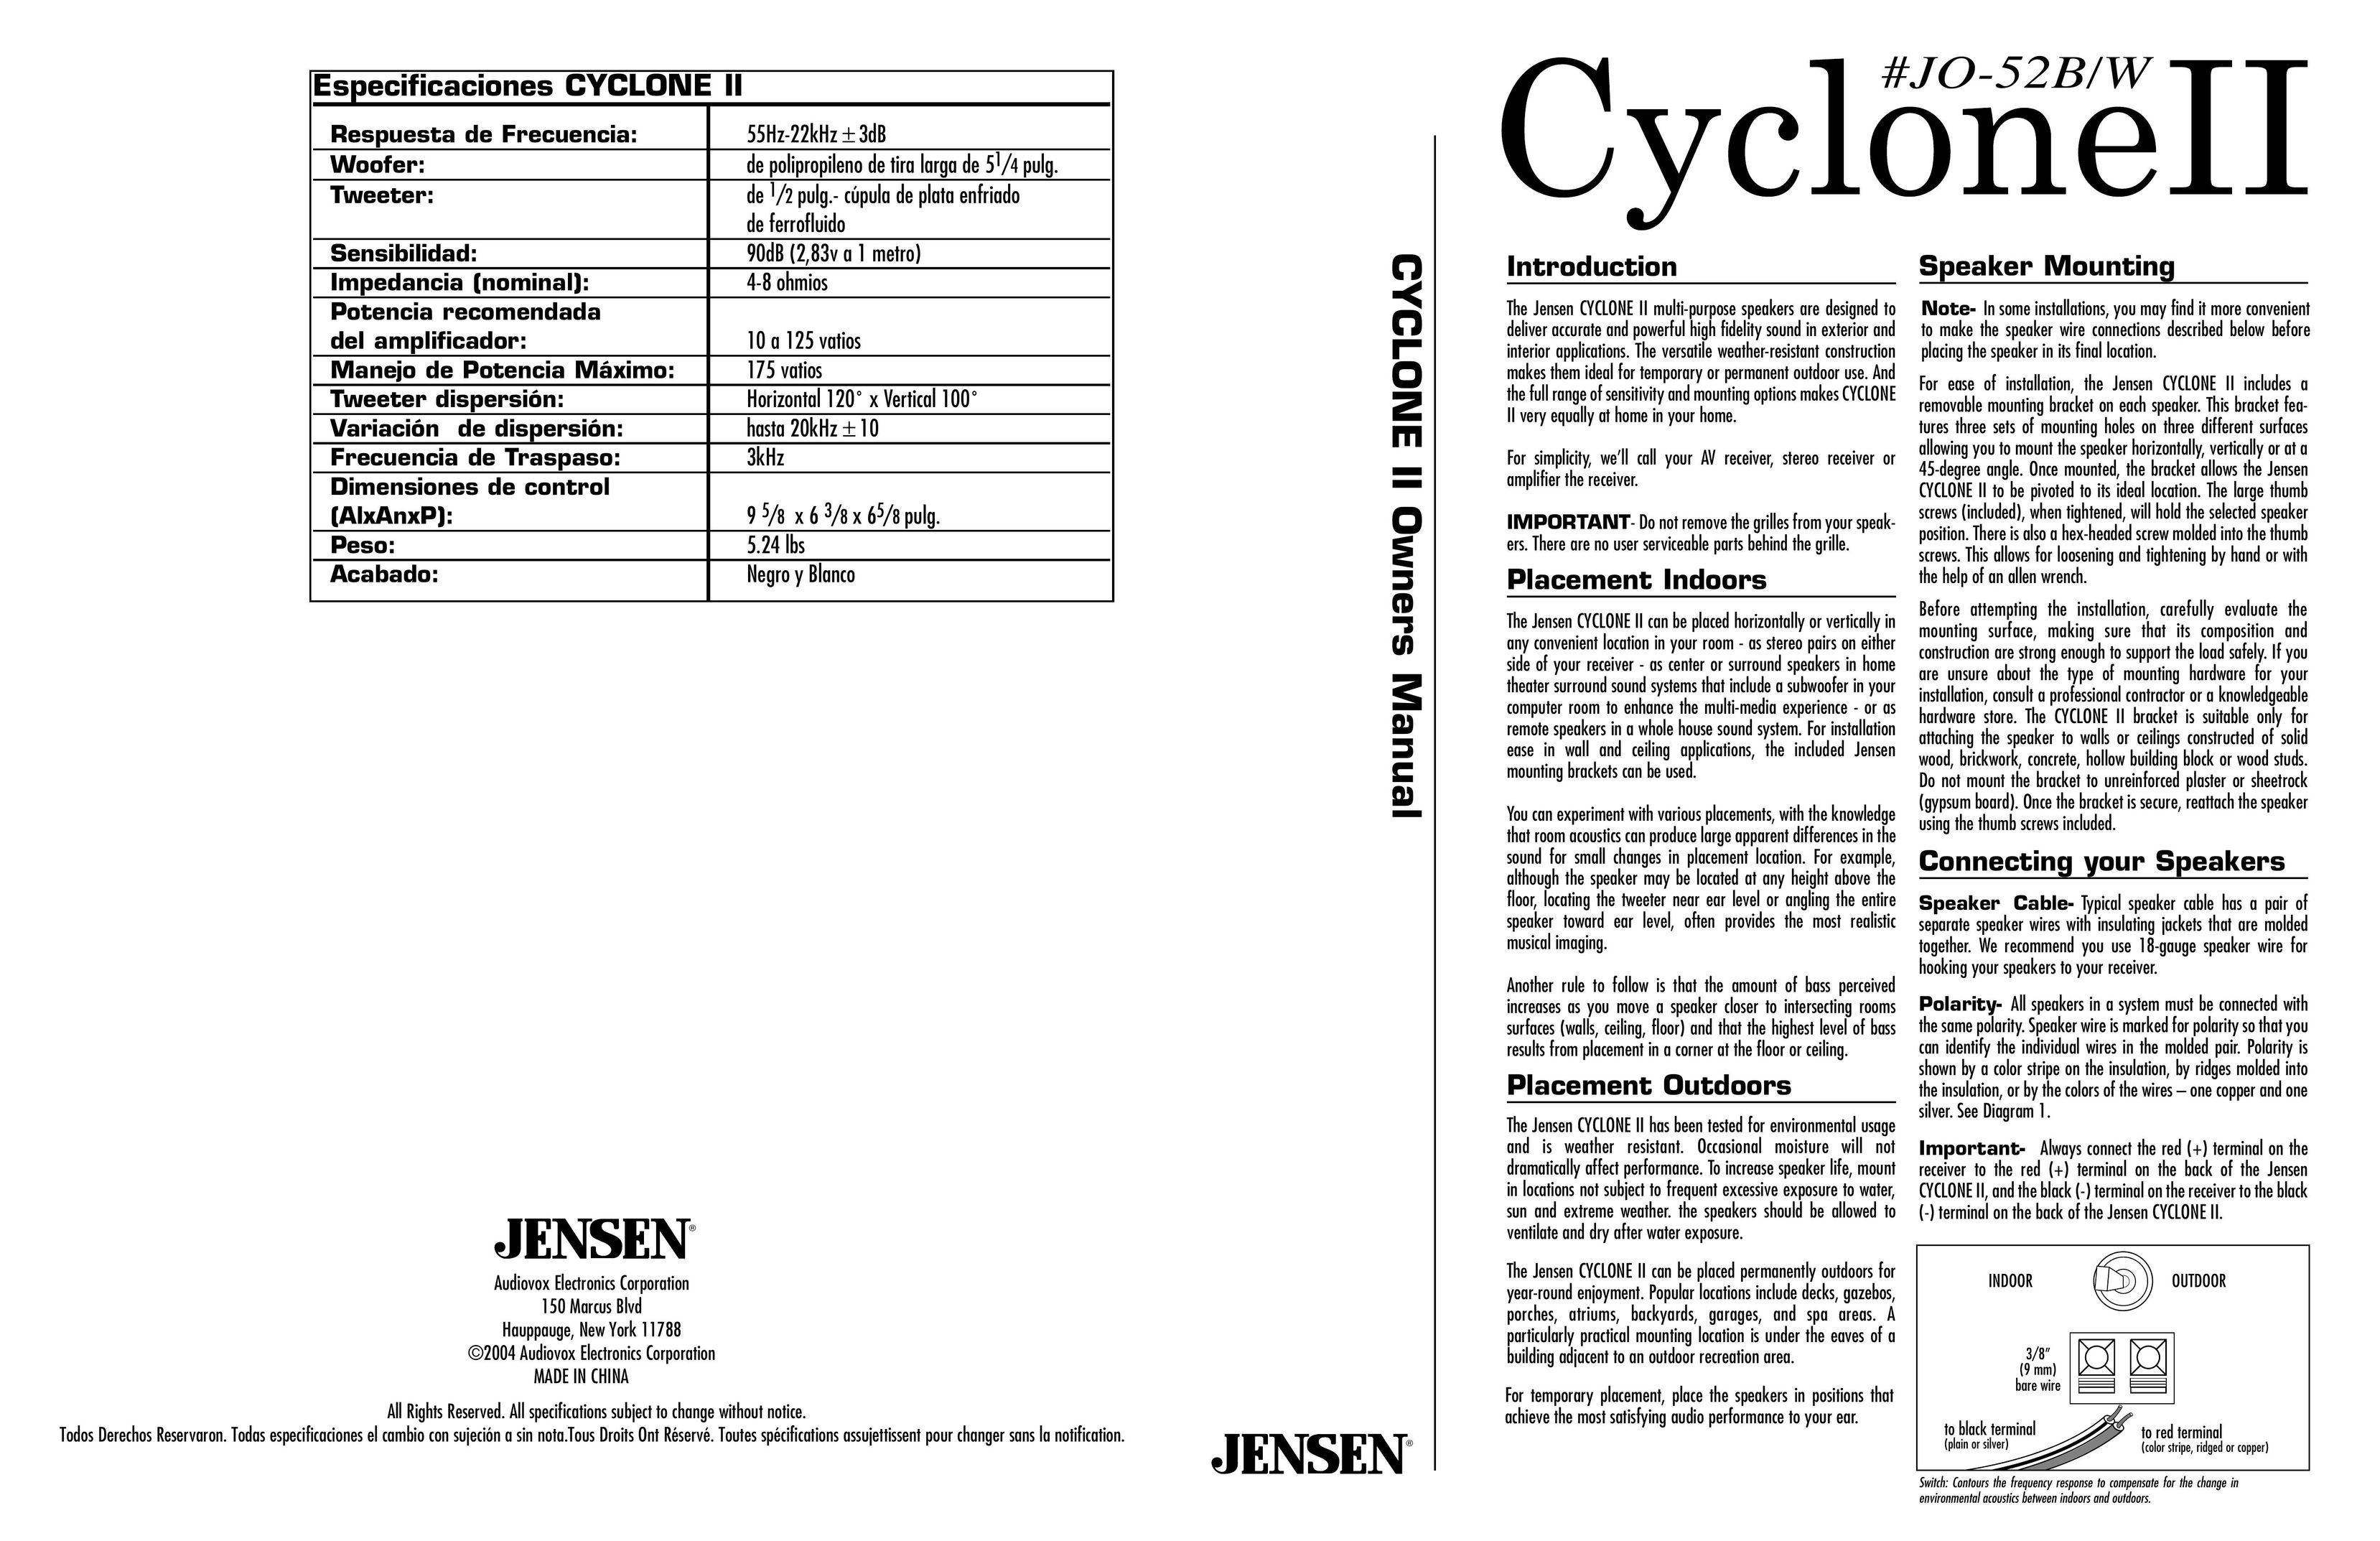 Jensen CYCLONE II Portable Speaker User Manual